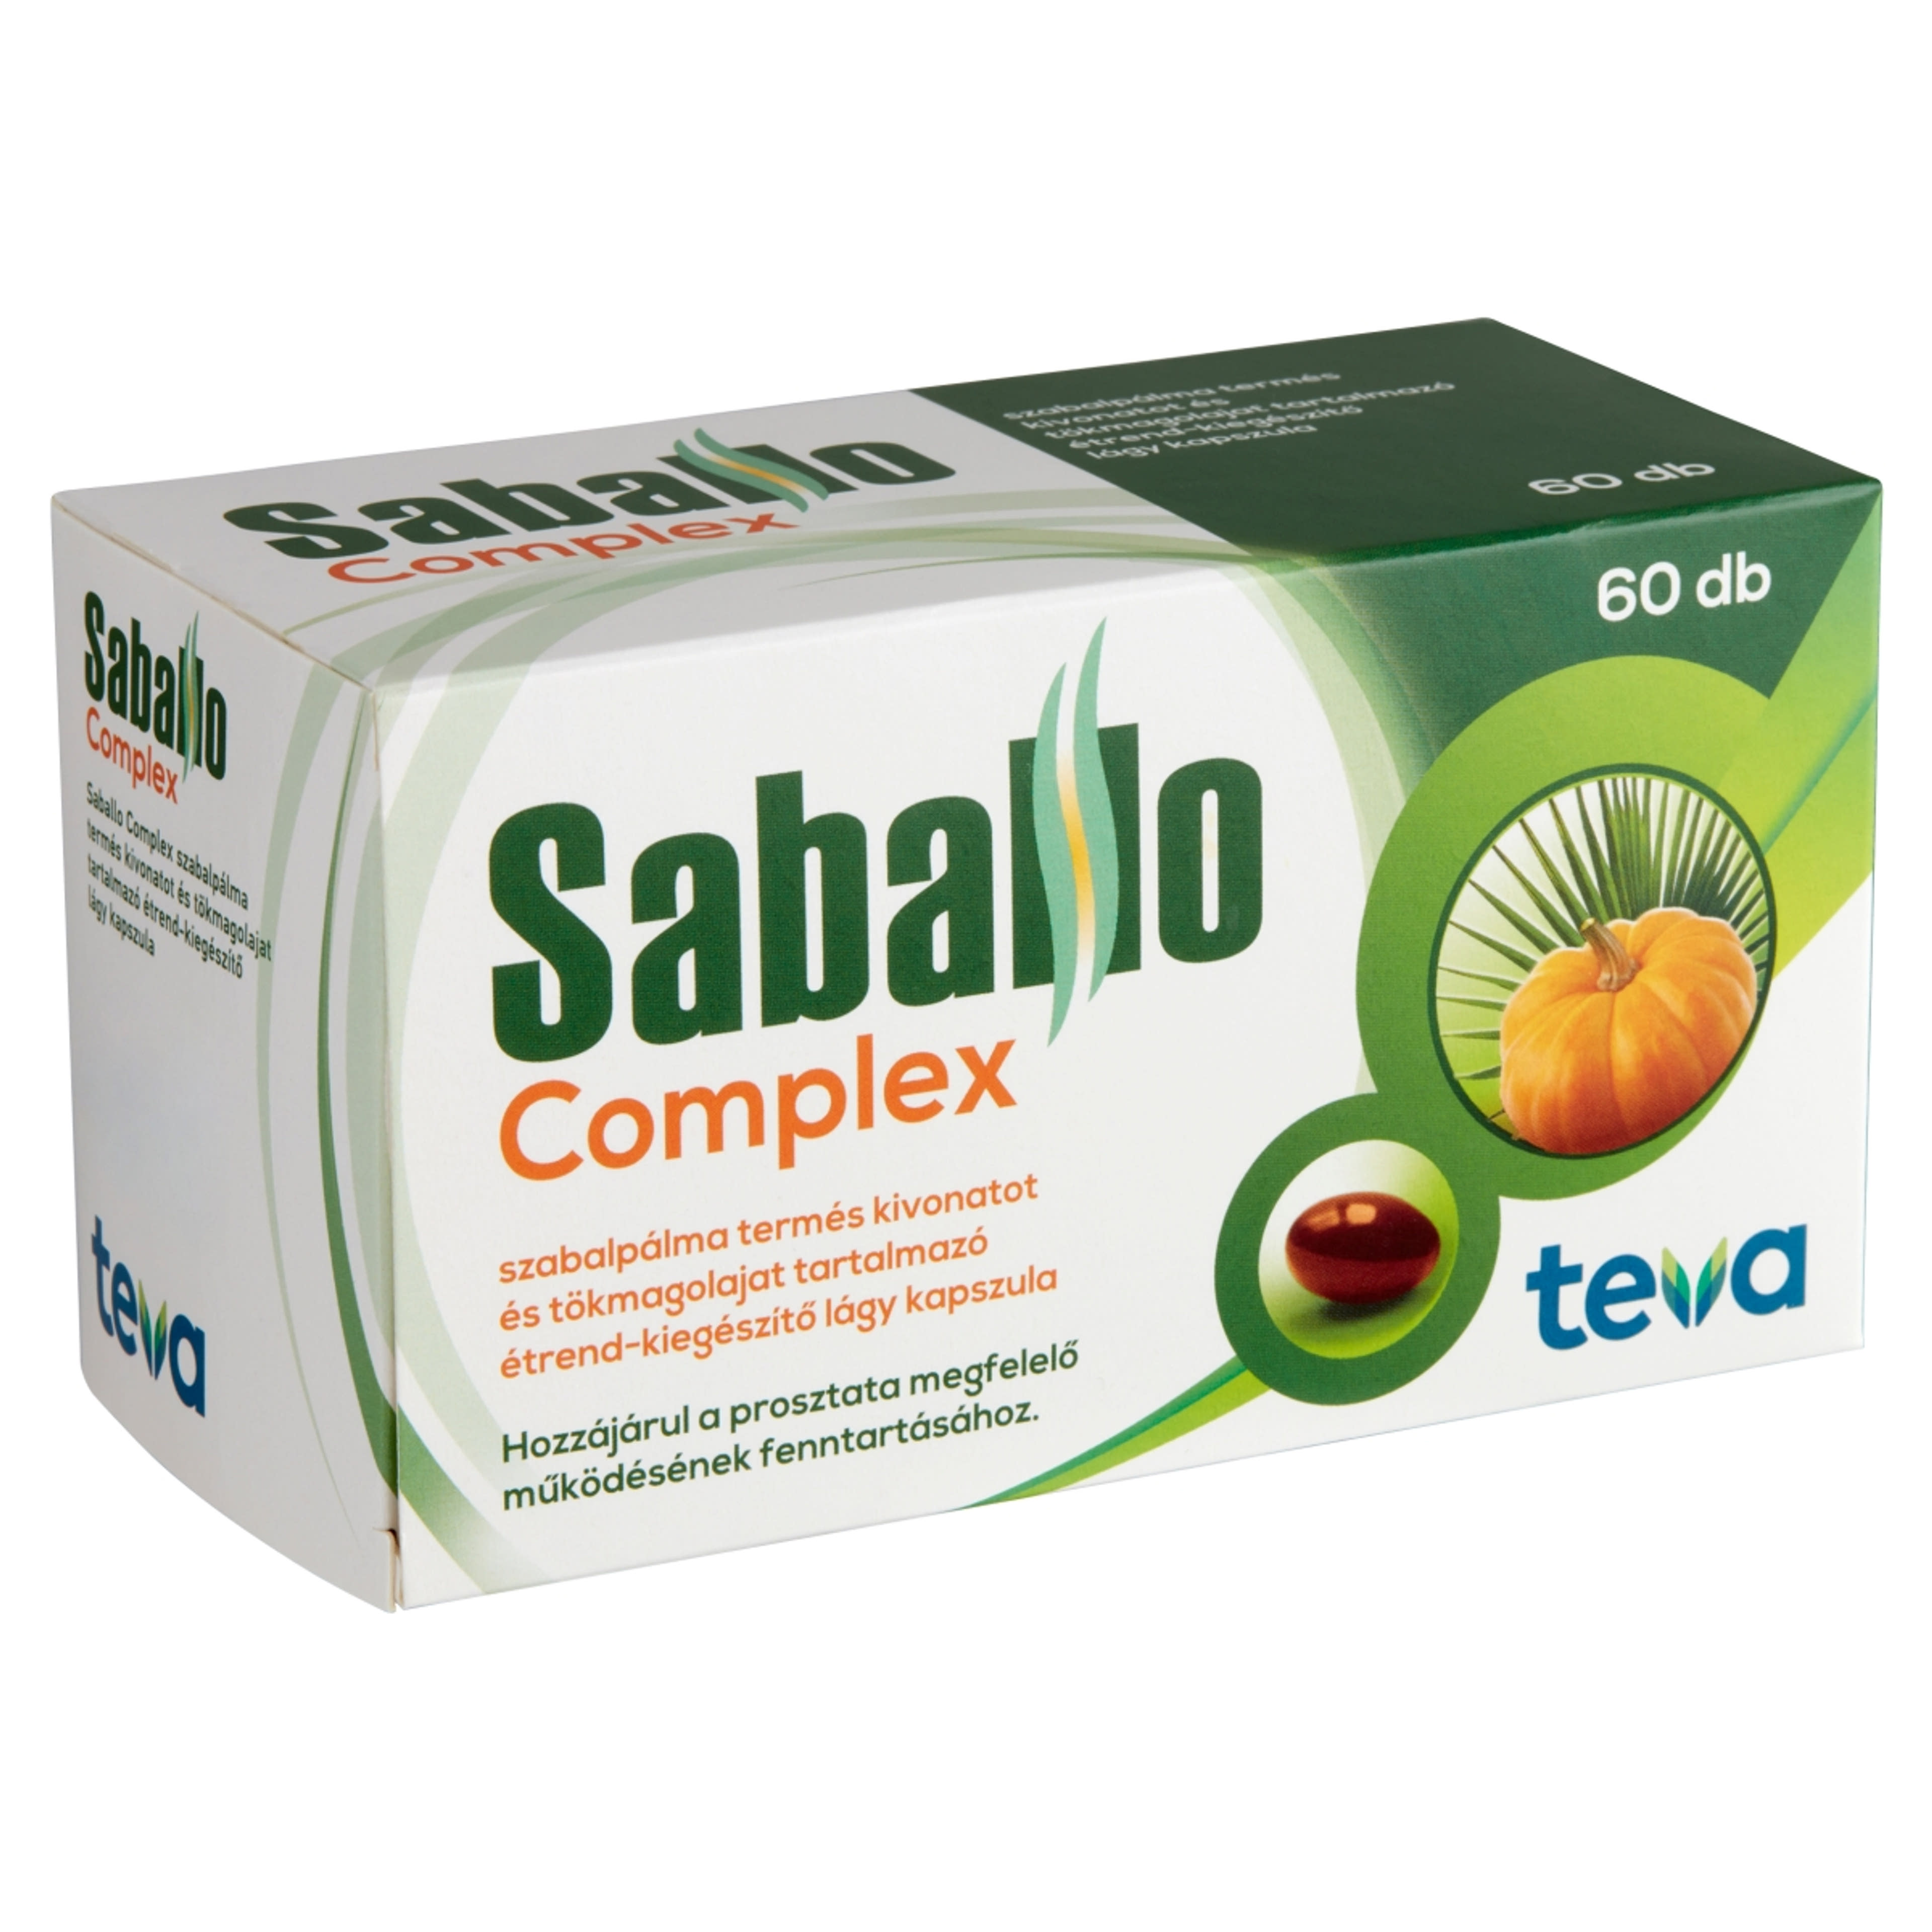 Saballo complex kapszula - 60 db-2